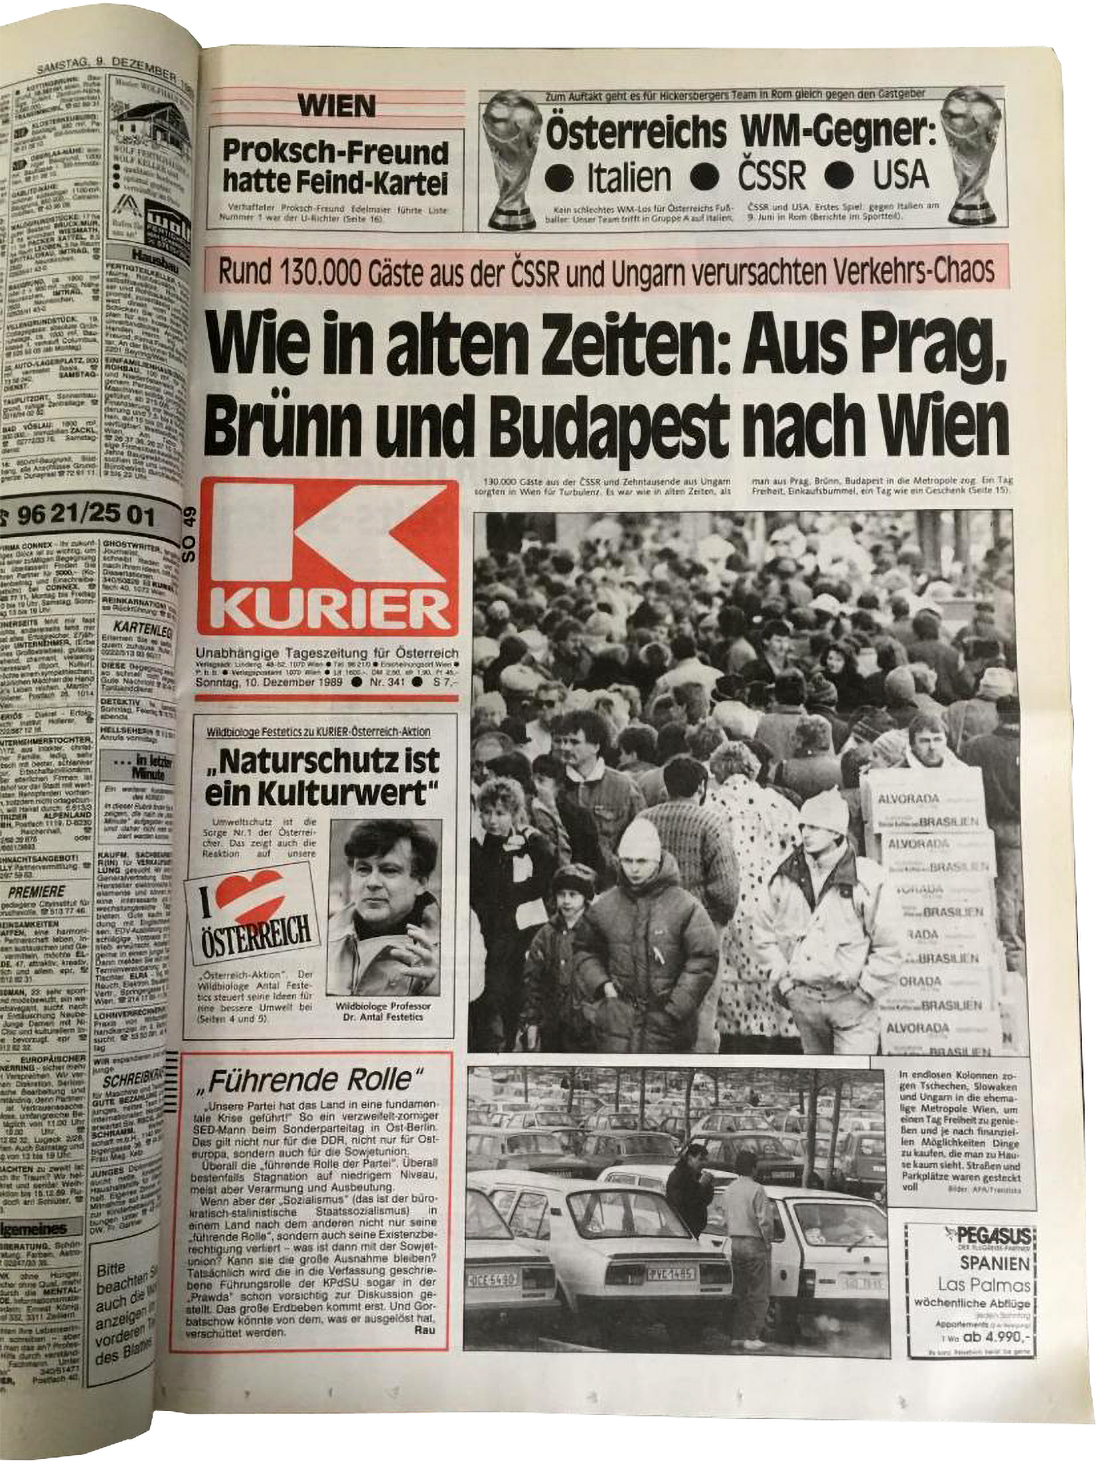 Kurier-Titelseite, 10. Dezember 1989, Wien Museum 